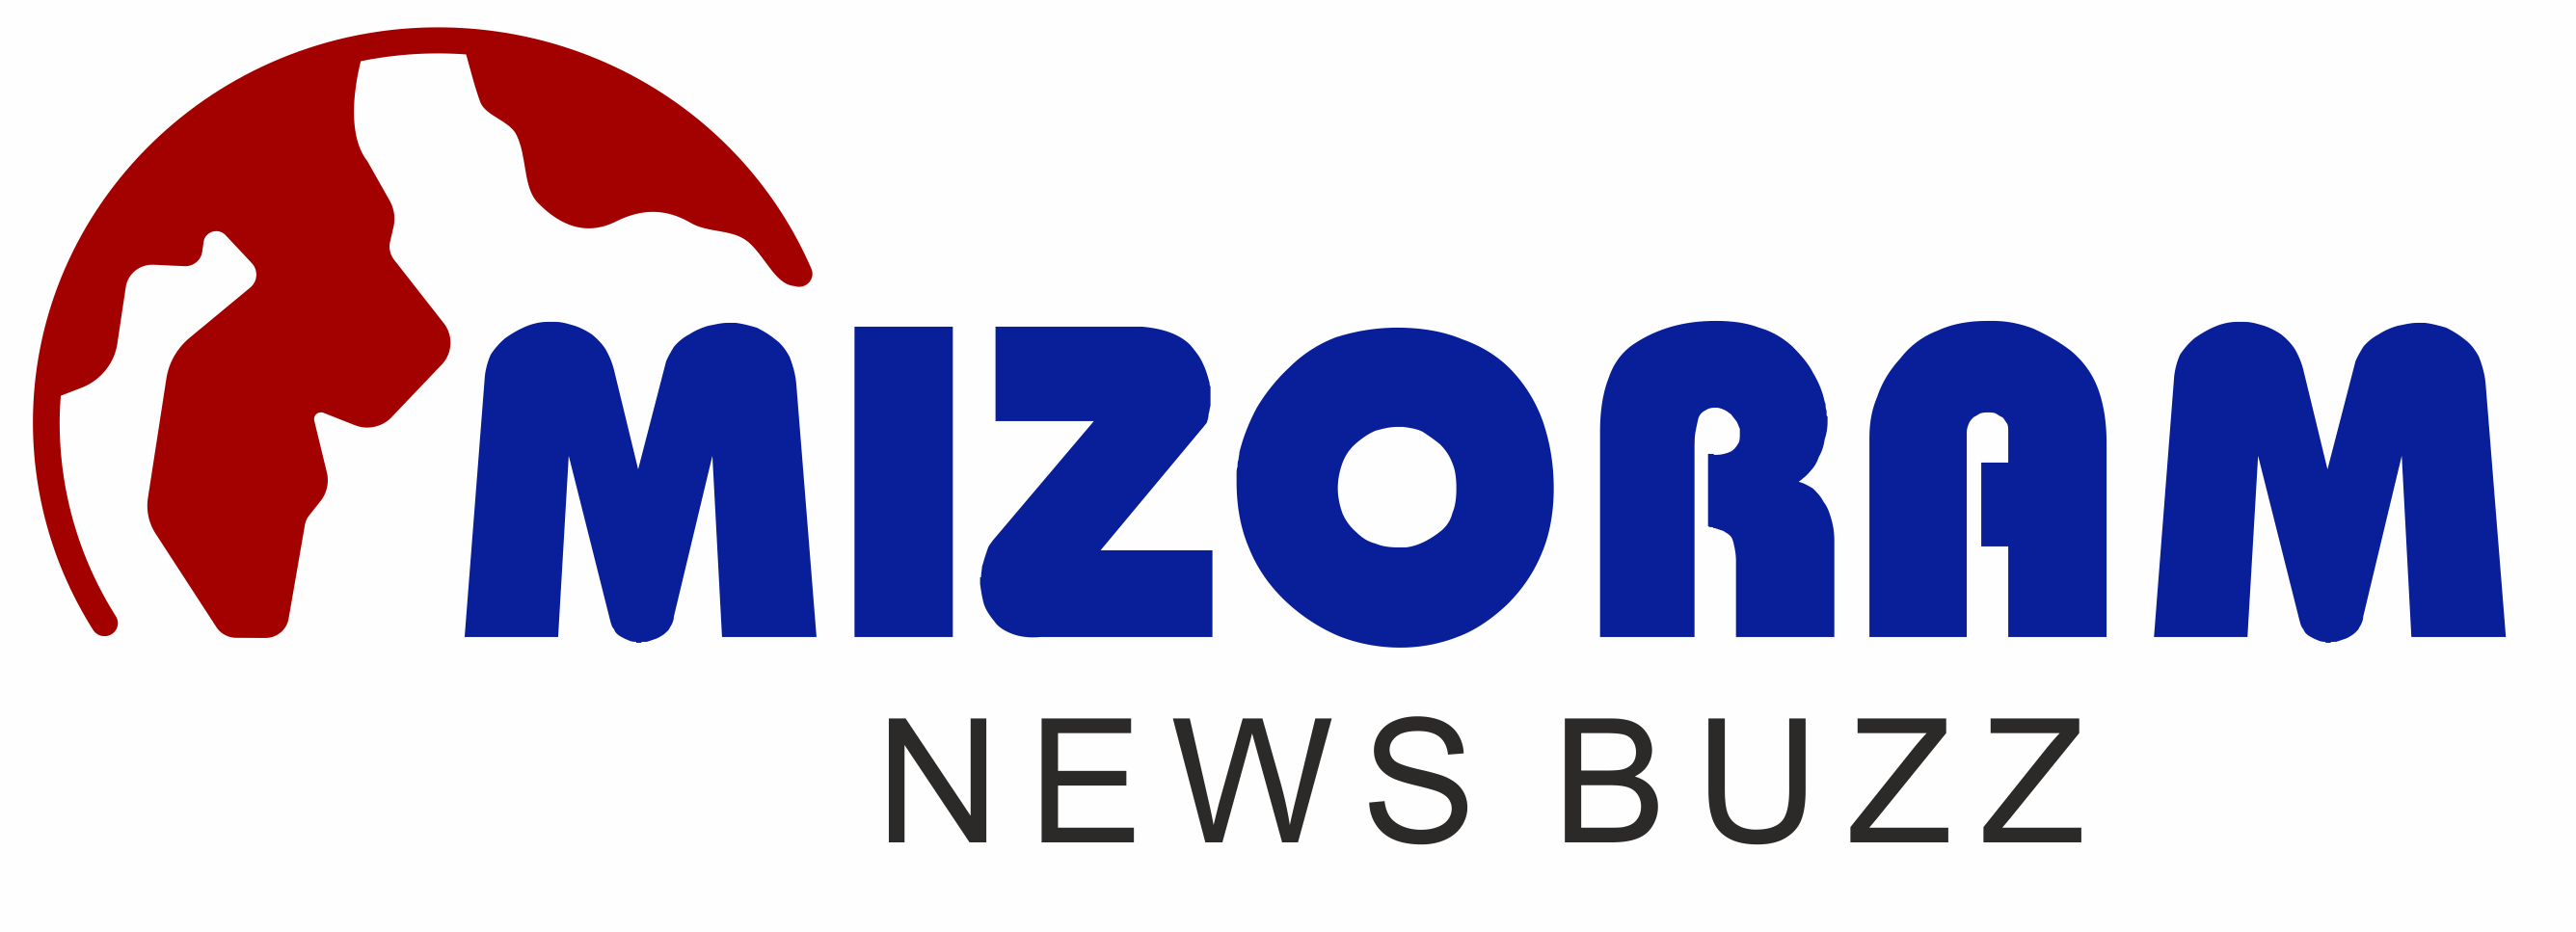 Mizoram News Buzz